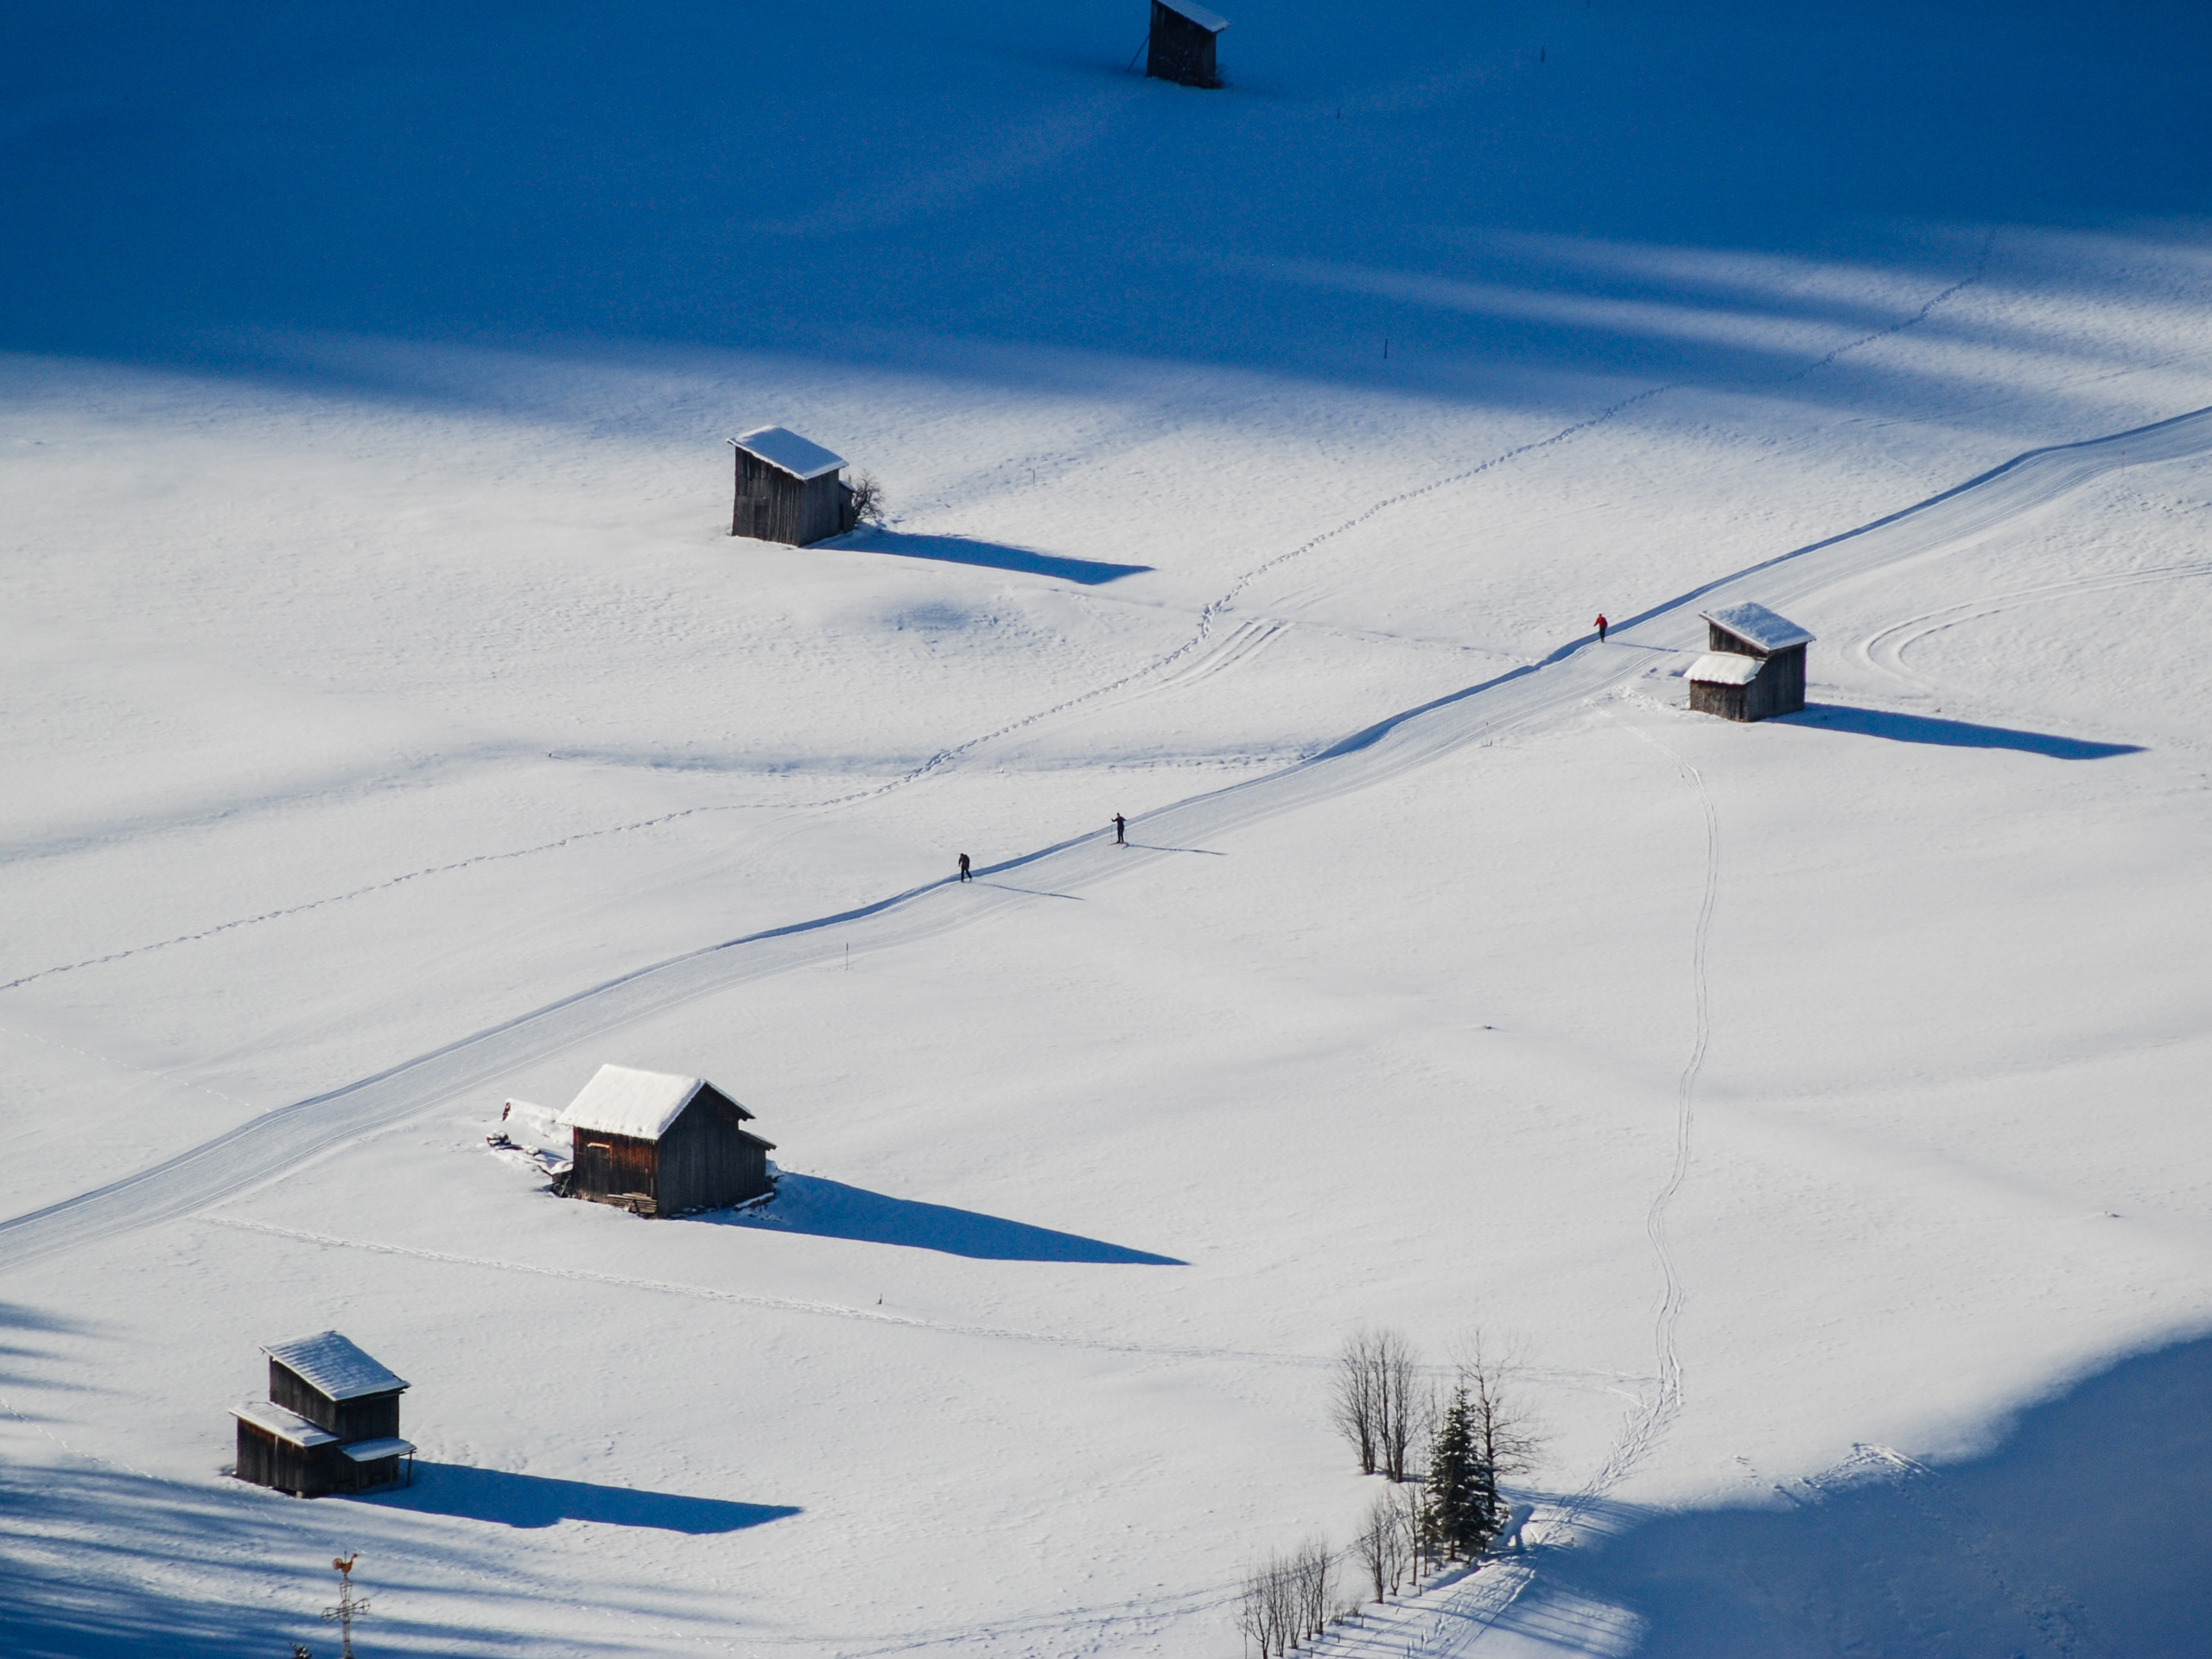 Snowy ski field in Italy